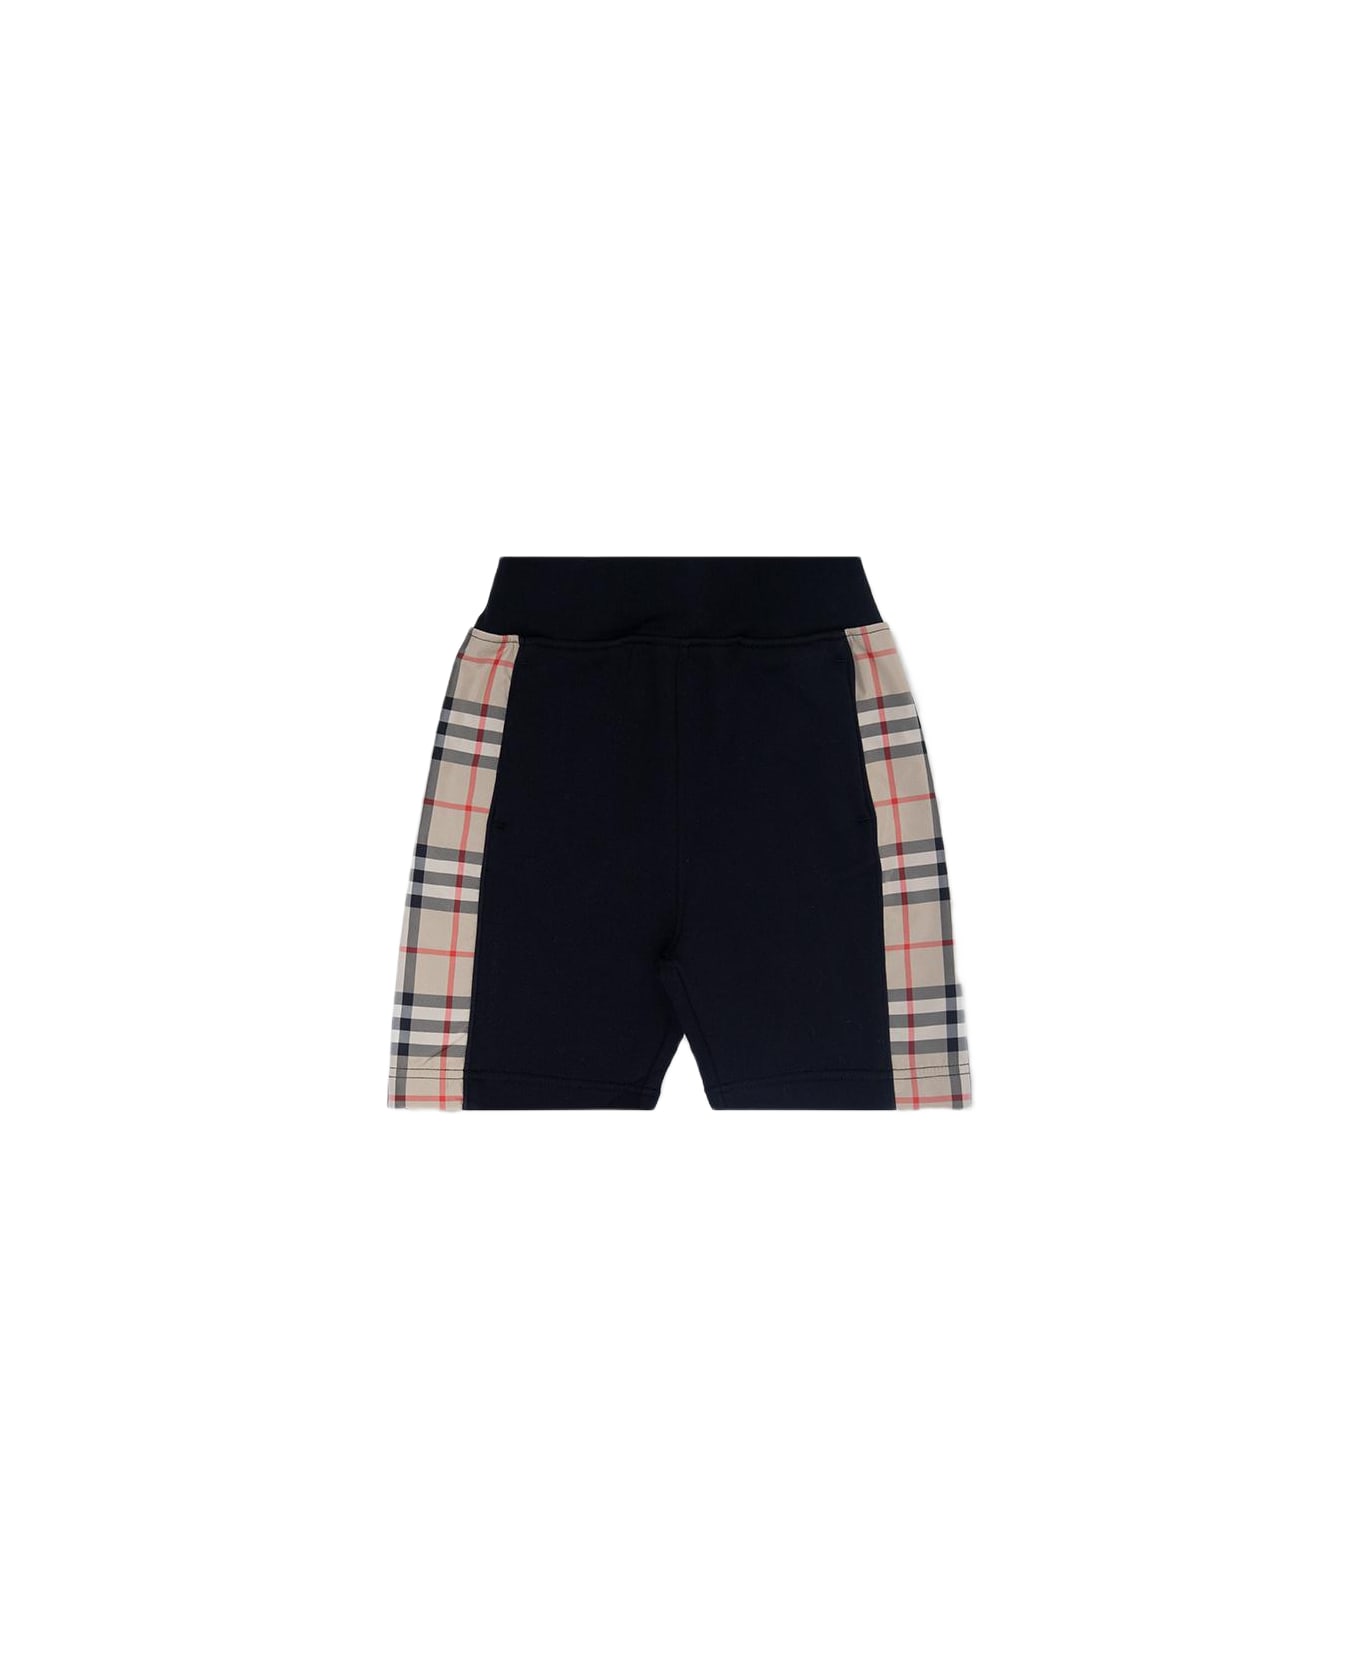 Burberry 'nolen' Patterned Shorts - Black